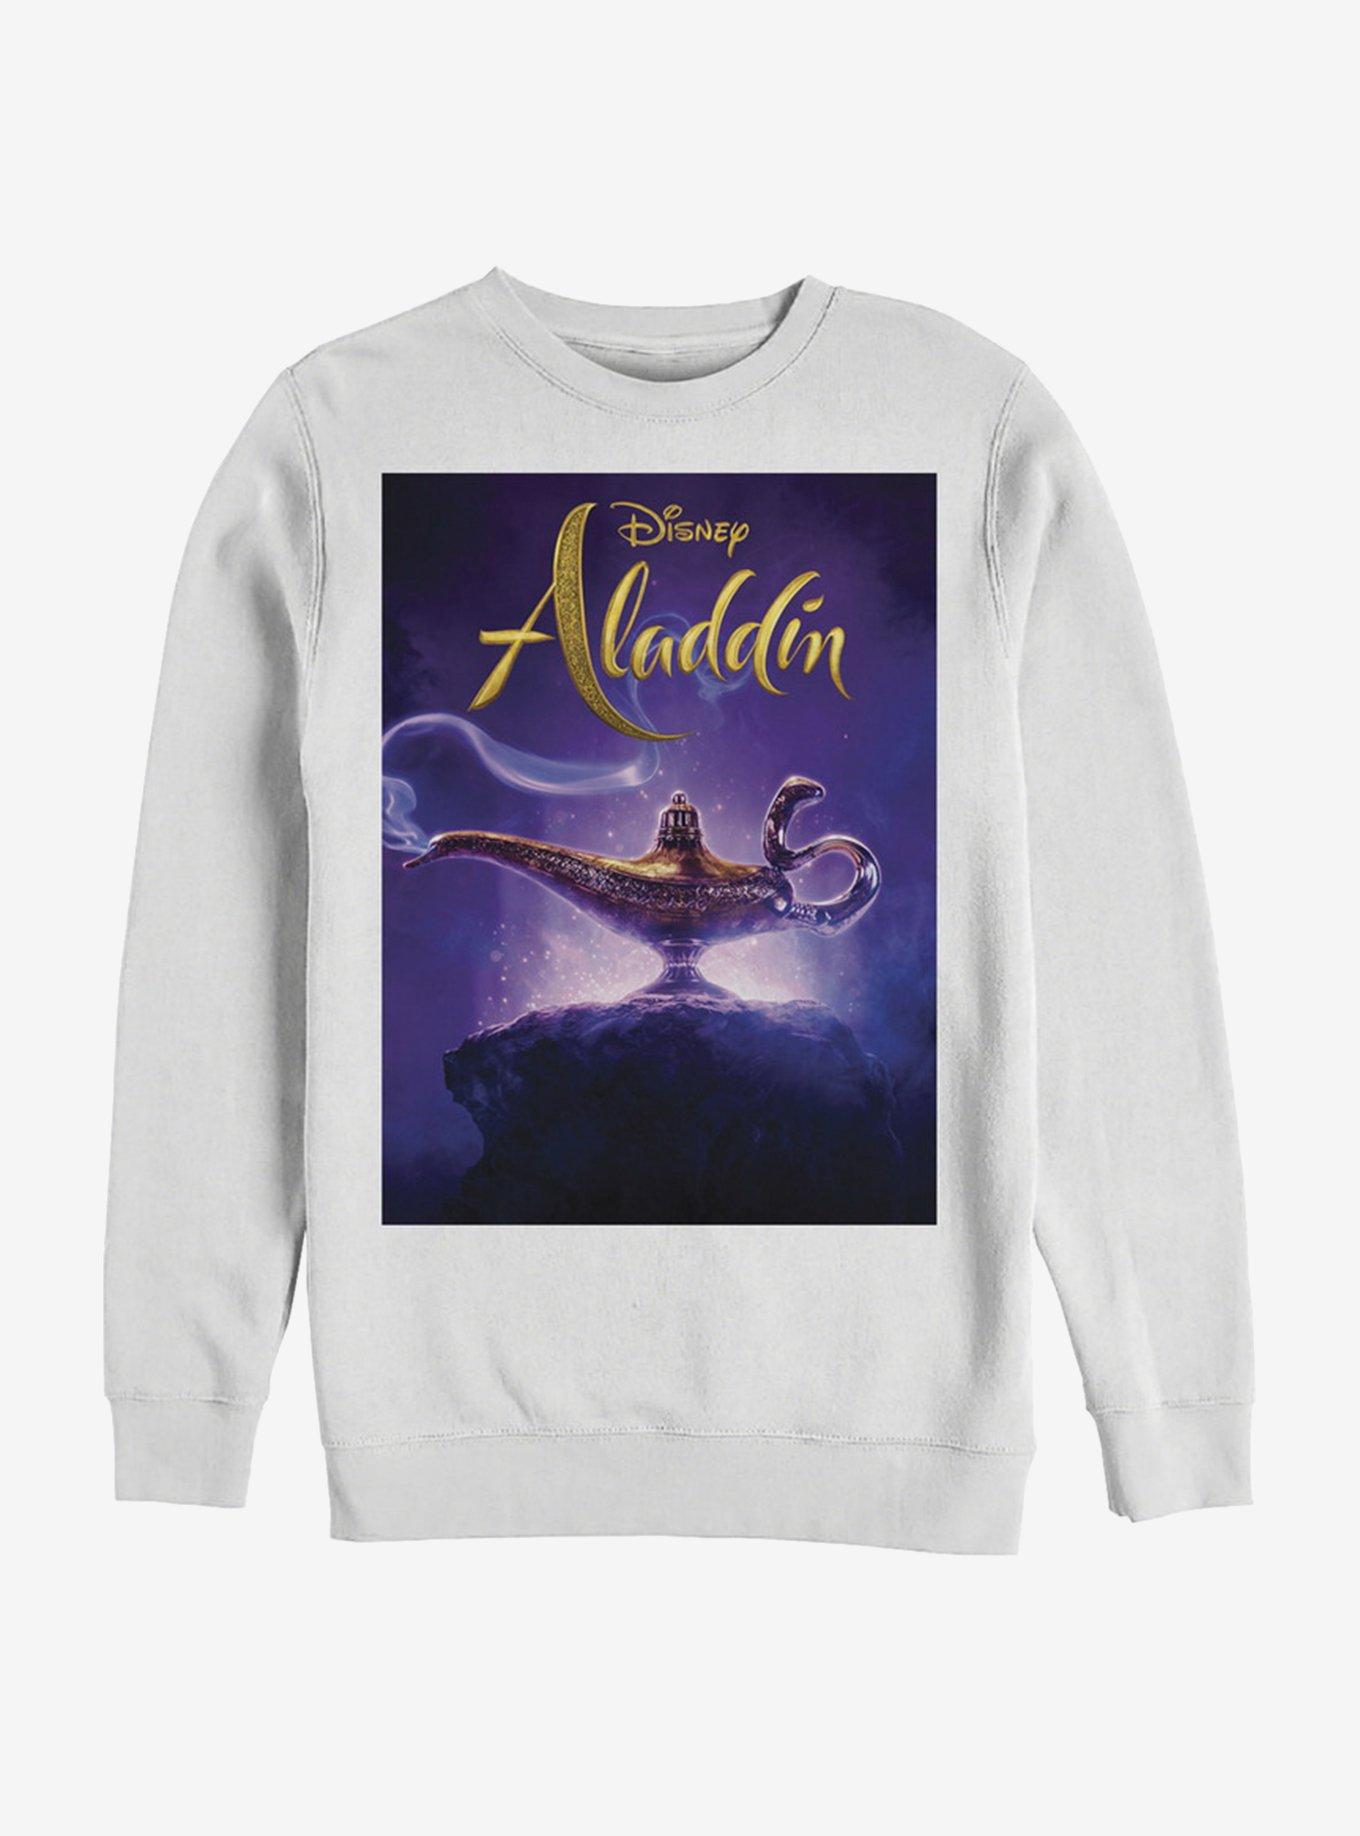 Disney Aladdin 2019 Aladdin Live Action Cover Sweatshirt, WHITE, hi-res